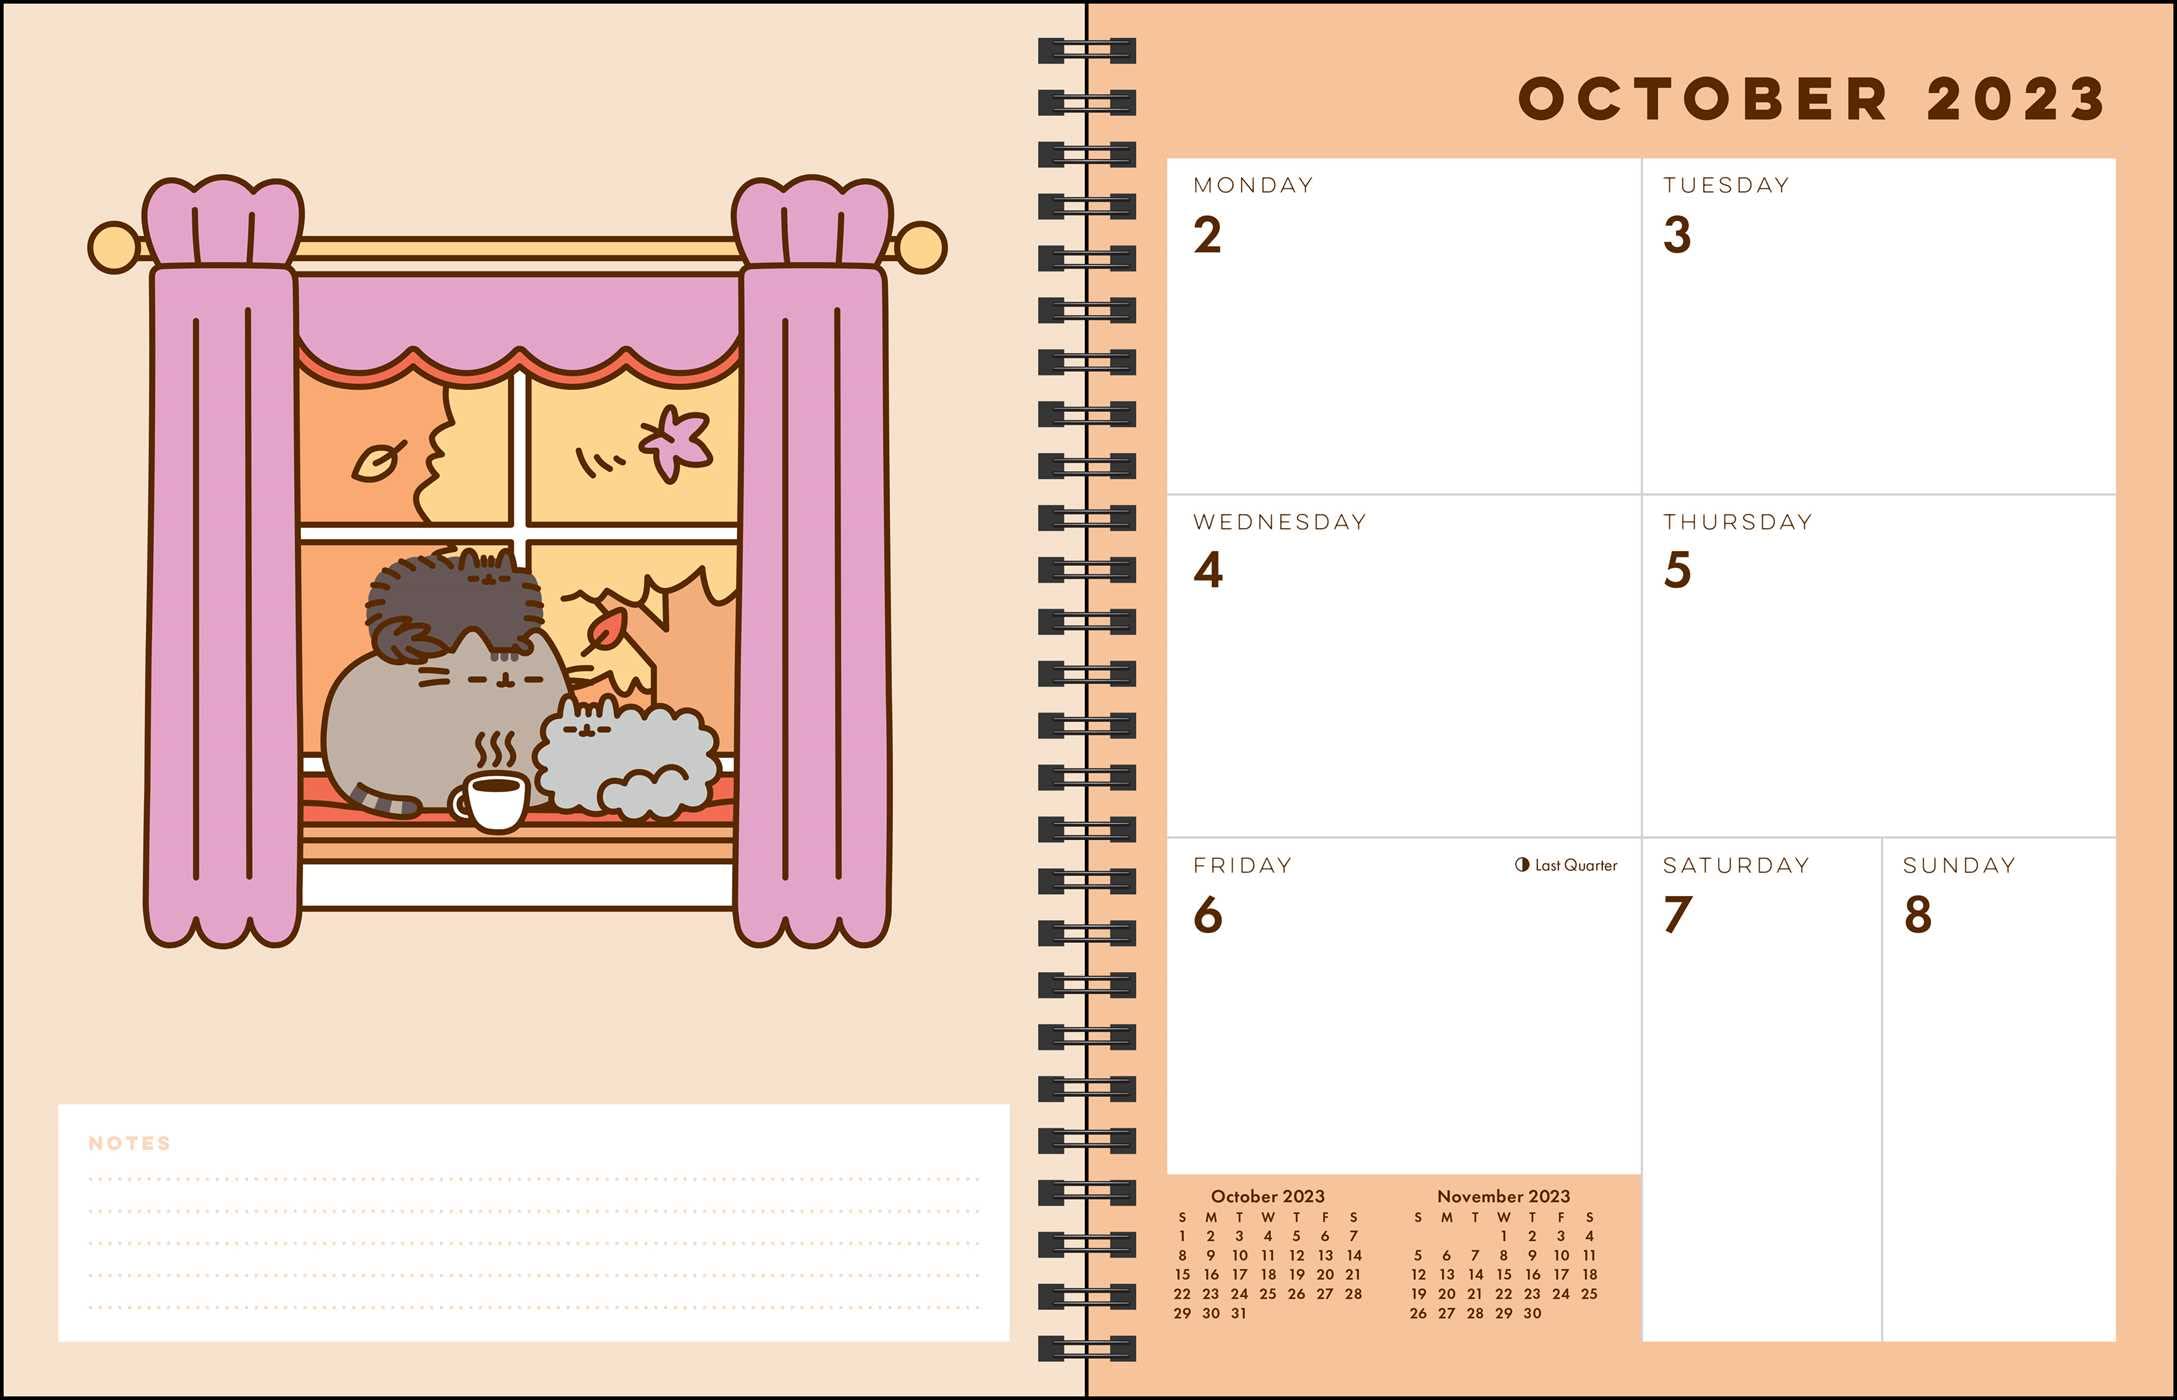 Pusheen 16-Month 2023-2024 Weekly/Monthly Planner Calendar